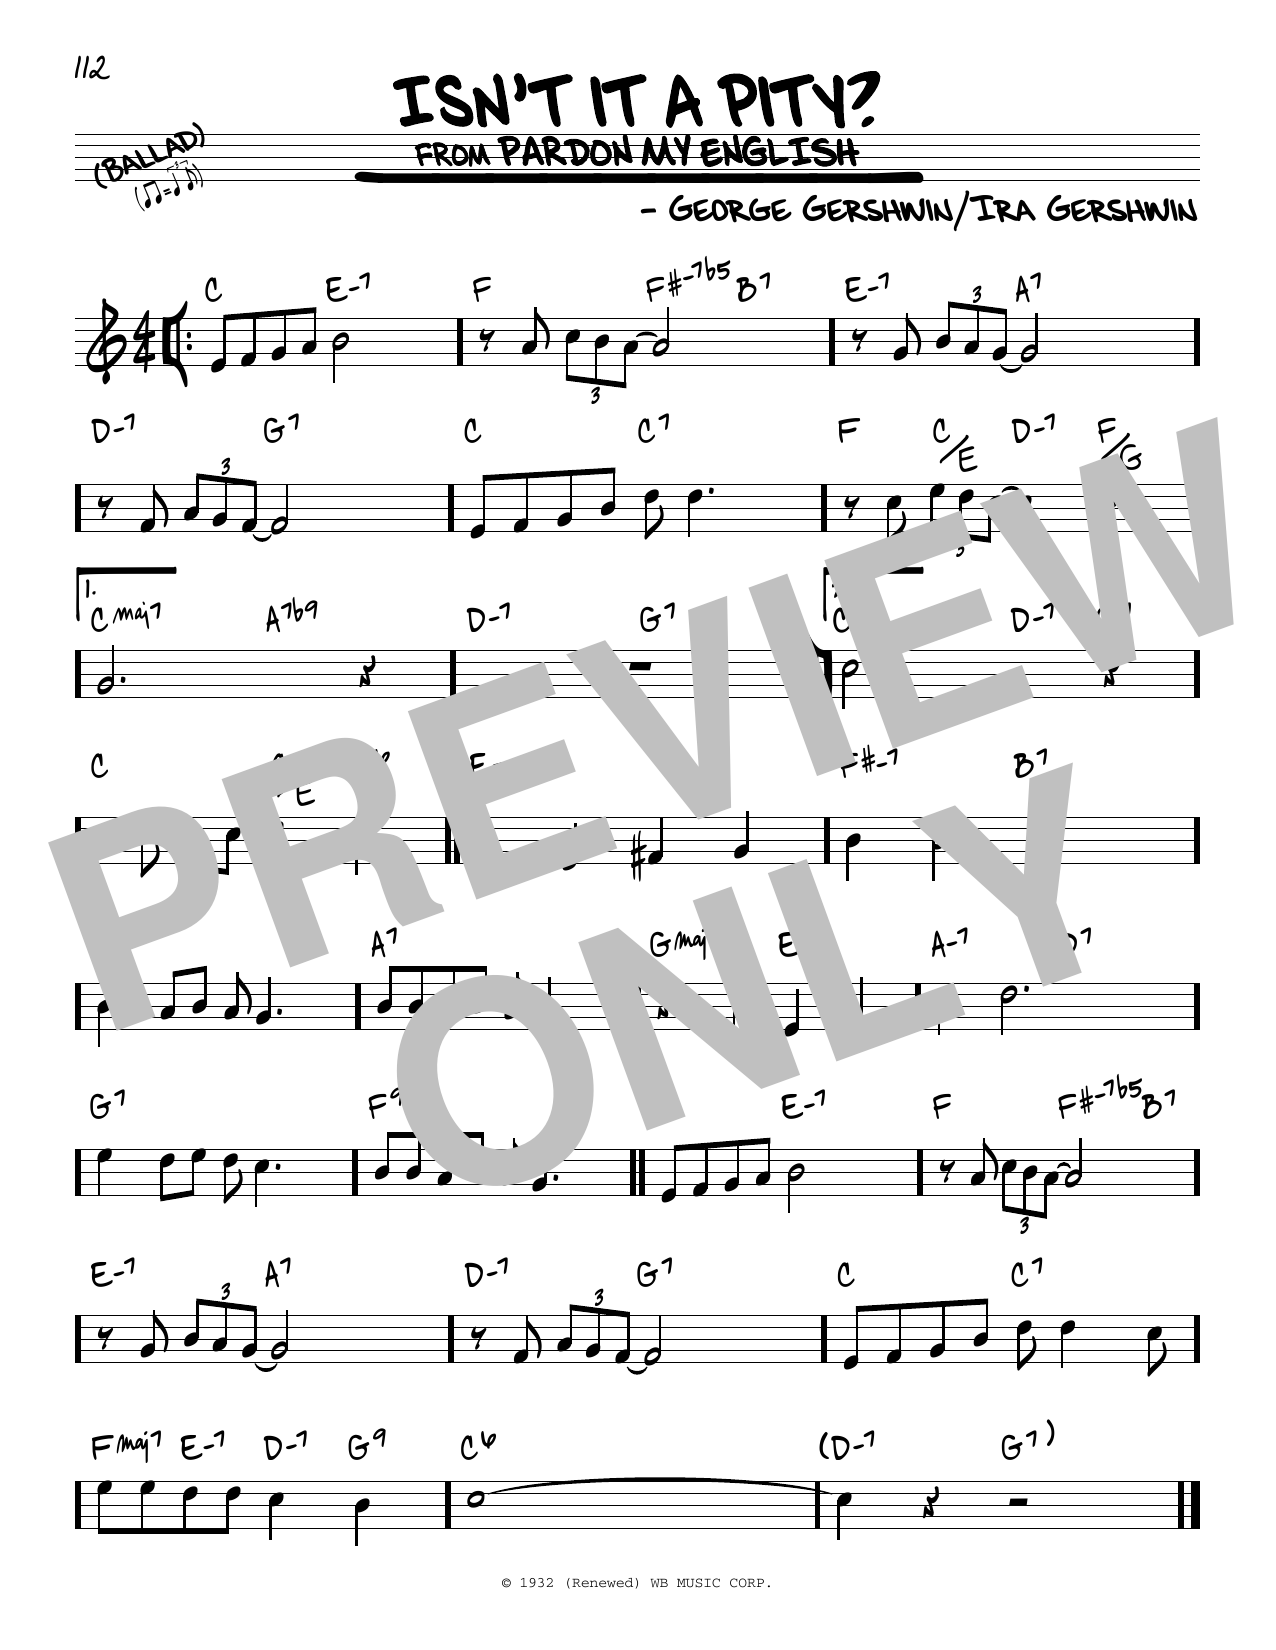 Download George Gershwin Isn't It A Pity? Sheet Music